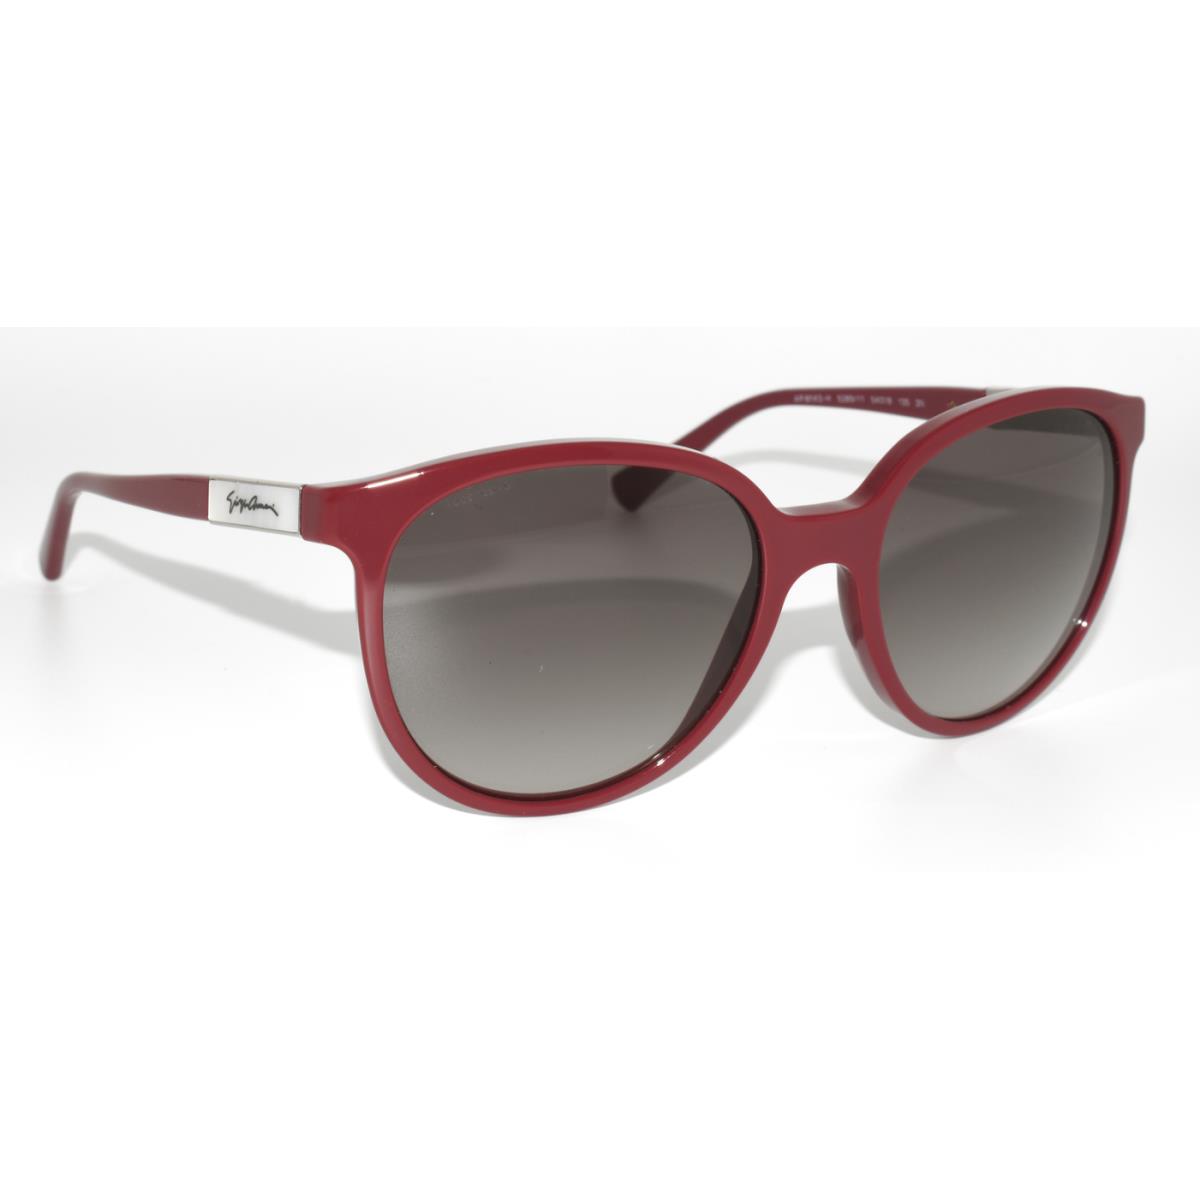 Giorgio Armani sunglasses  - Red Brown Frame, Gray Lens 0